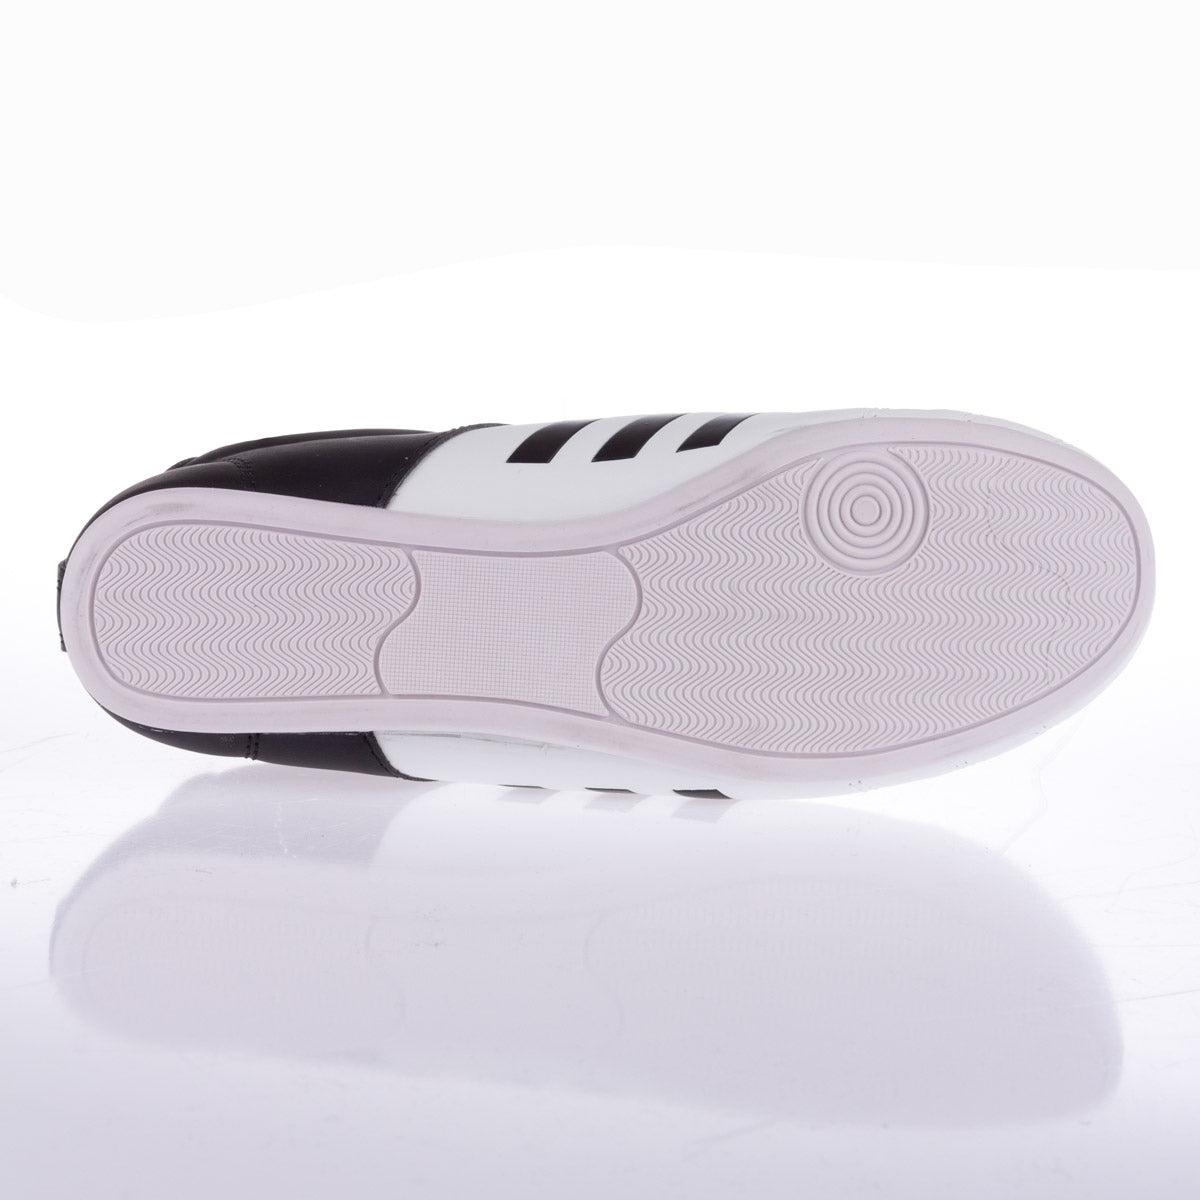 Chaussures adidas enfant ADI-KICK II - blanc/noir, ADITKK01-kids